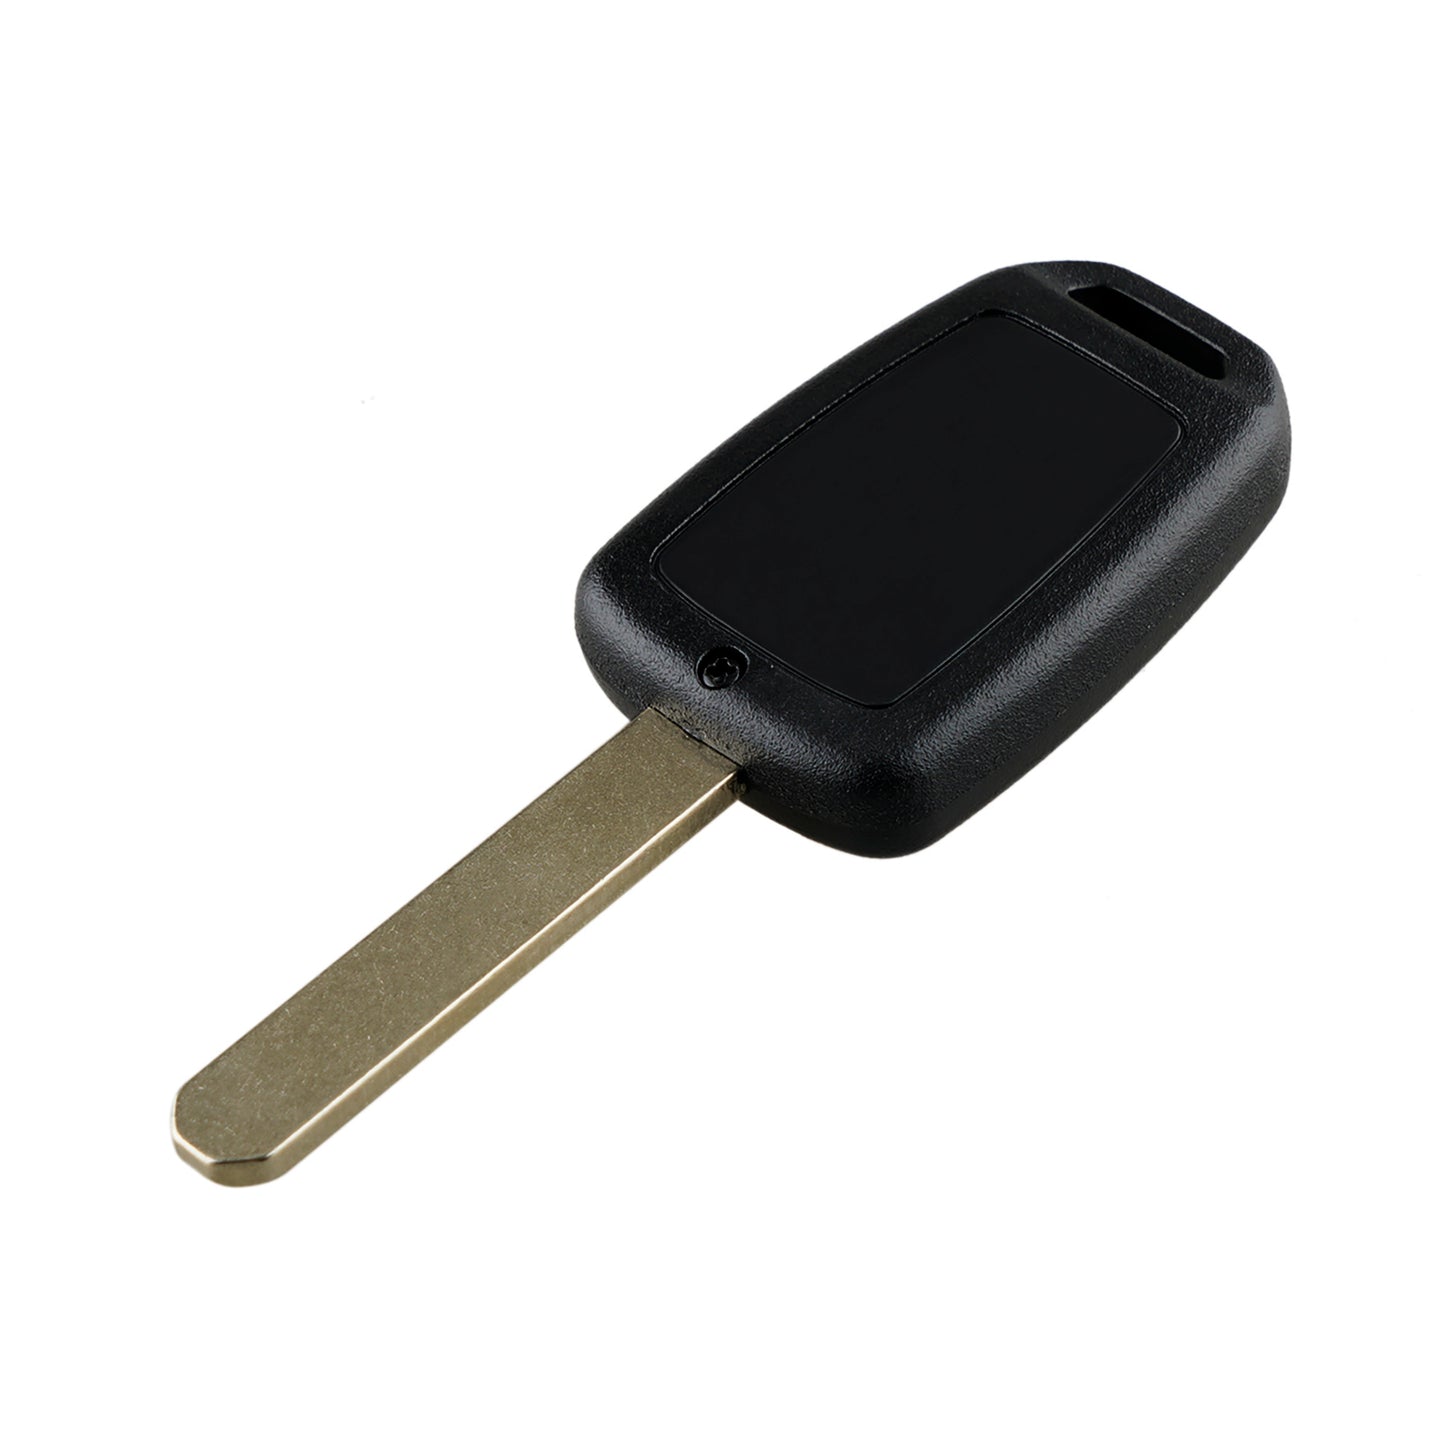 4 Buttons 313.8MHz Keyless Entry Fob Remote Car Key For 2013-2015 Honda Accord Sport LX Civic FCC ID: MLBHLIK6-1T SKU : J063